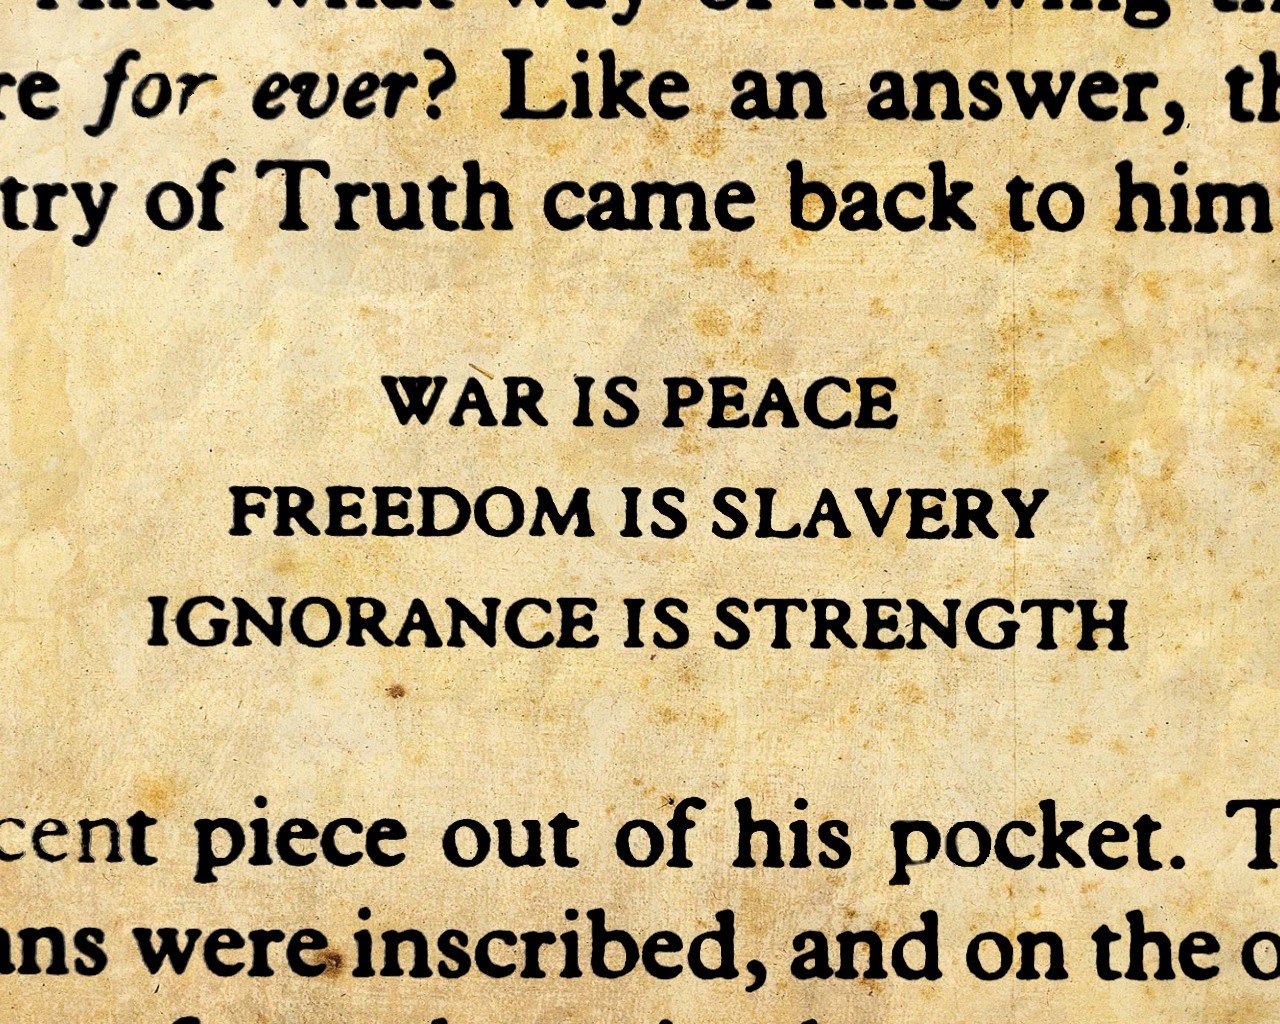 1984, Literature, George Orwell Wallpaper